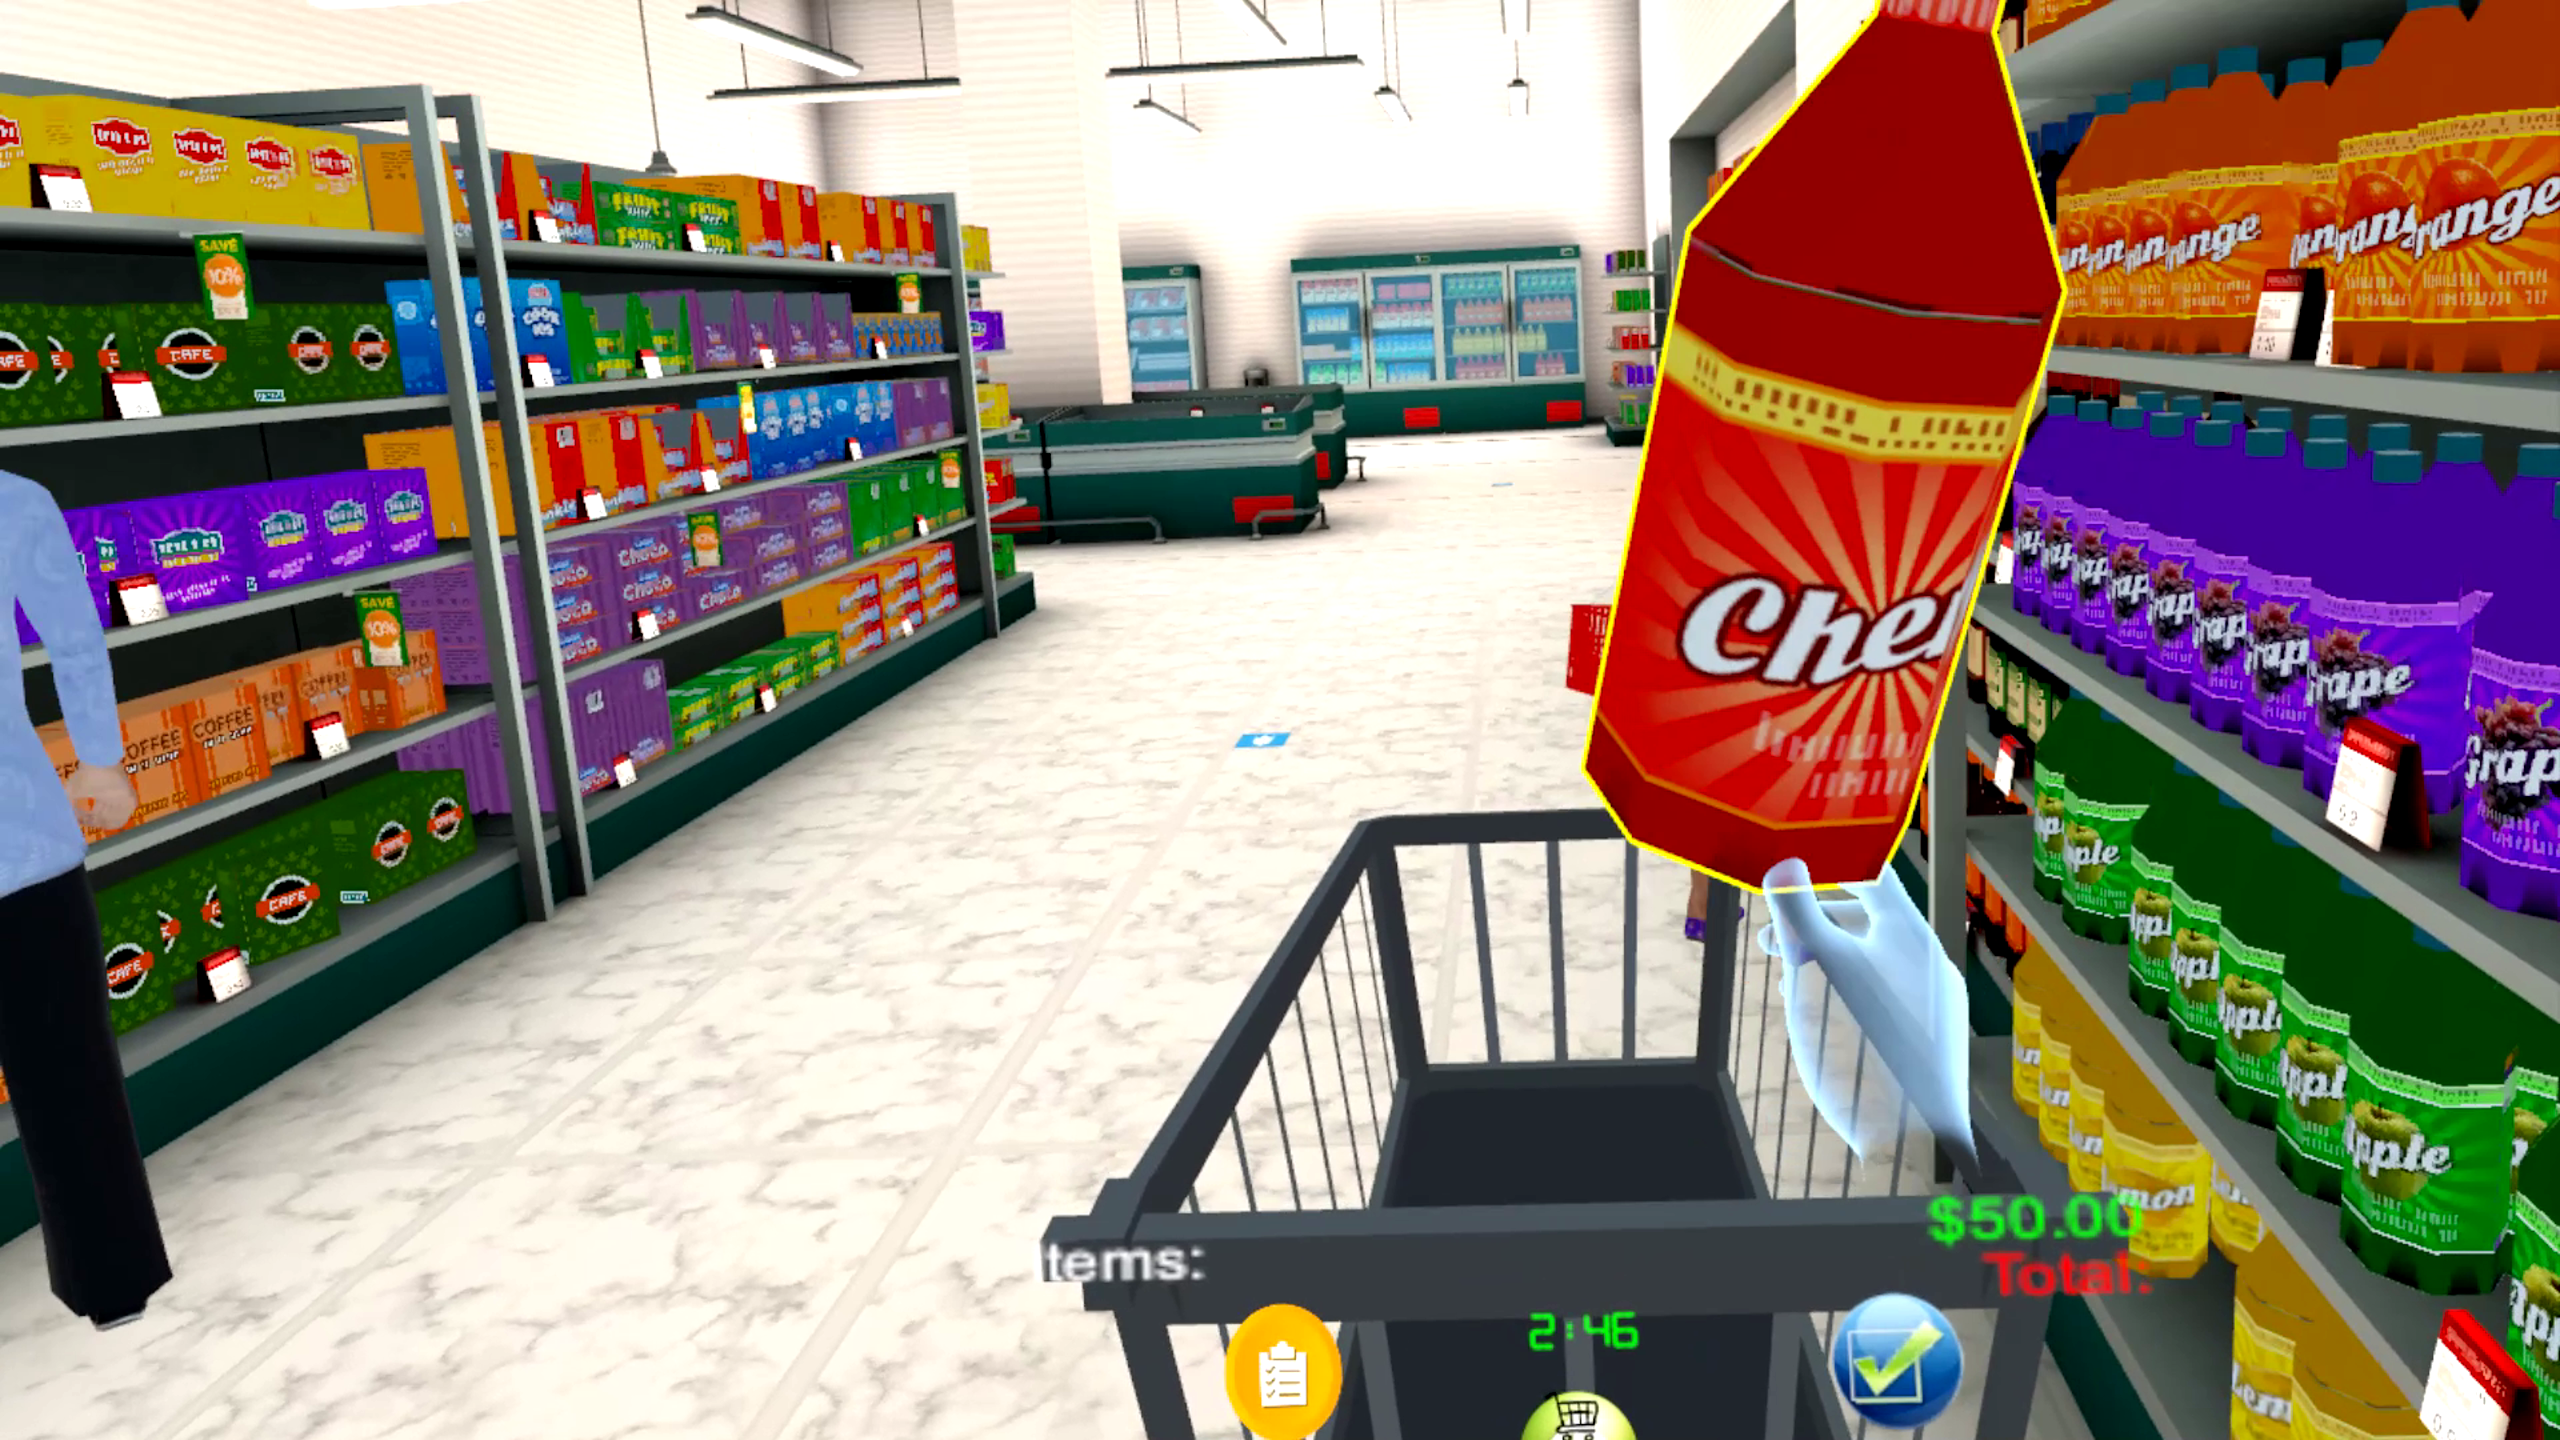 Симулятор супермаркета на телефон на русском. Супермаркет симулятор. Симулятор продуктового магазина. Магазин внутри игры. Симулятор магазина VR.